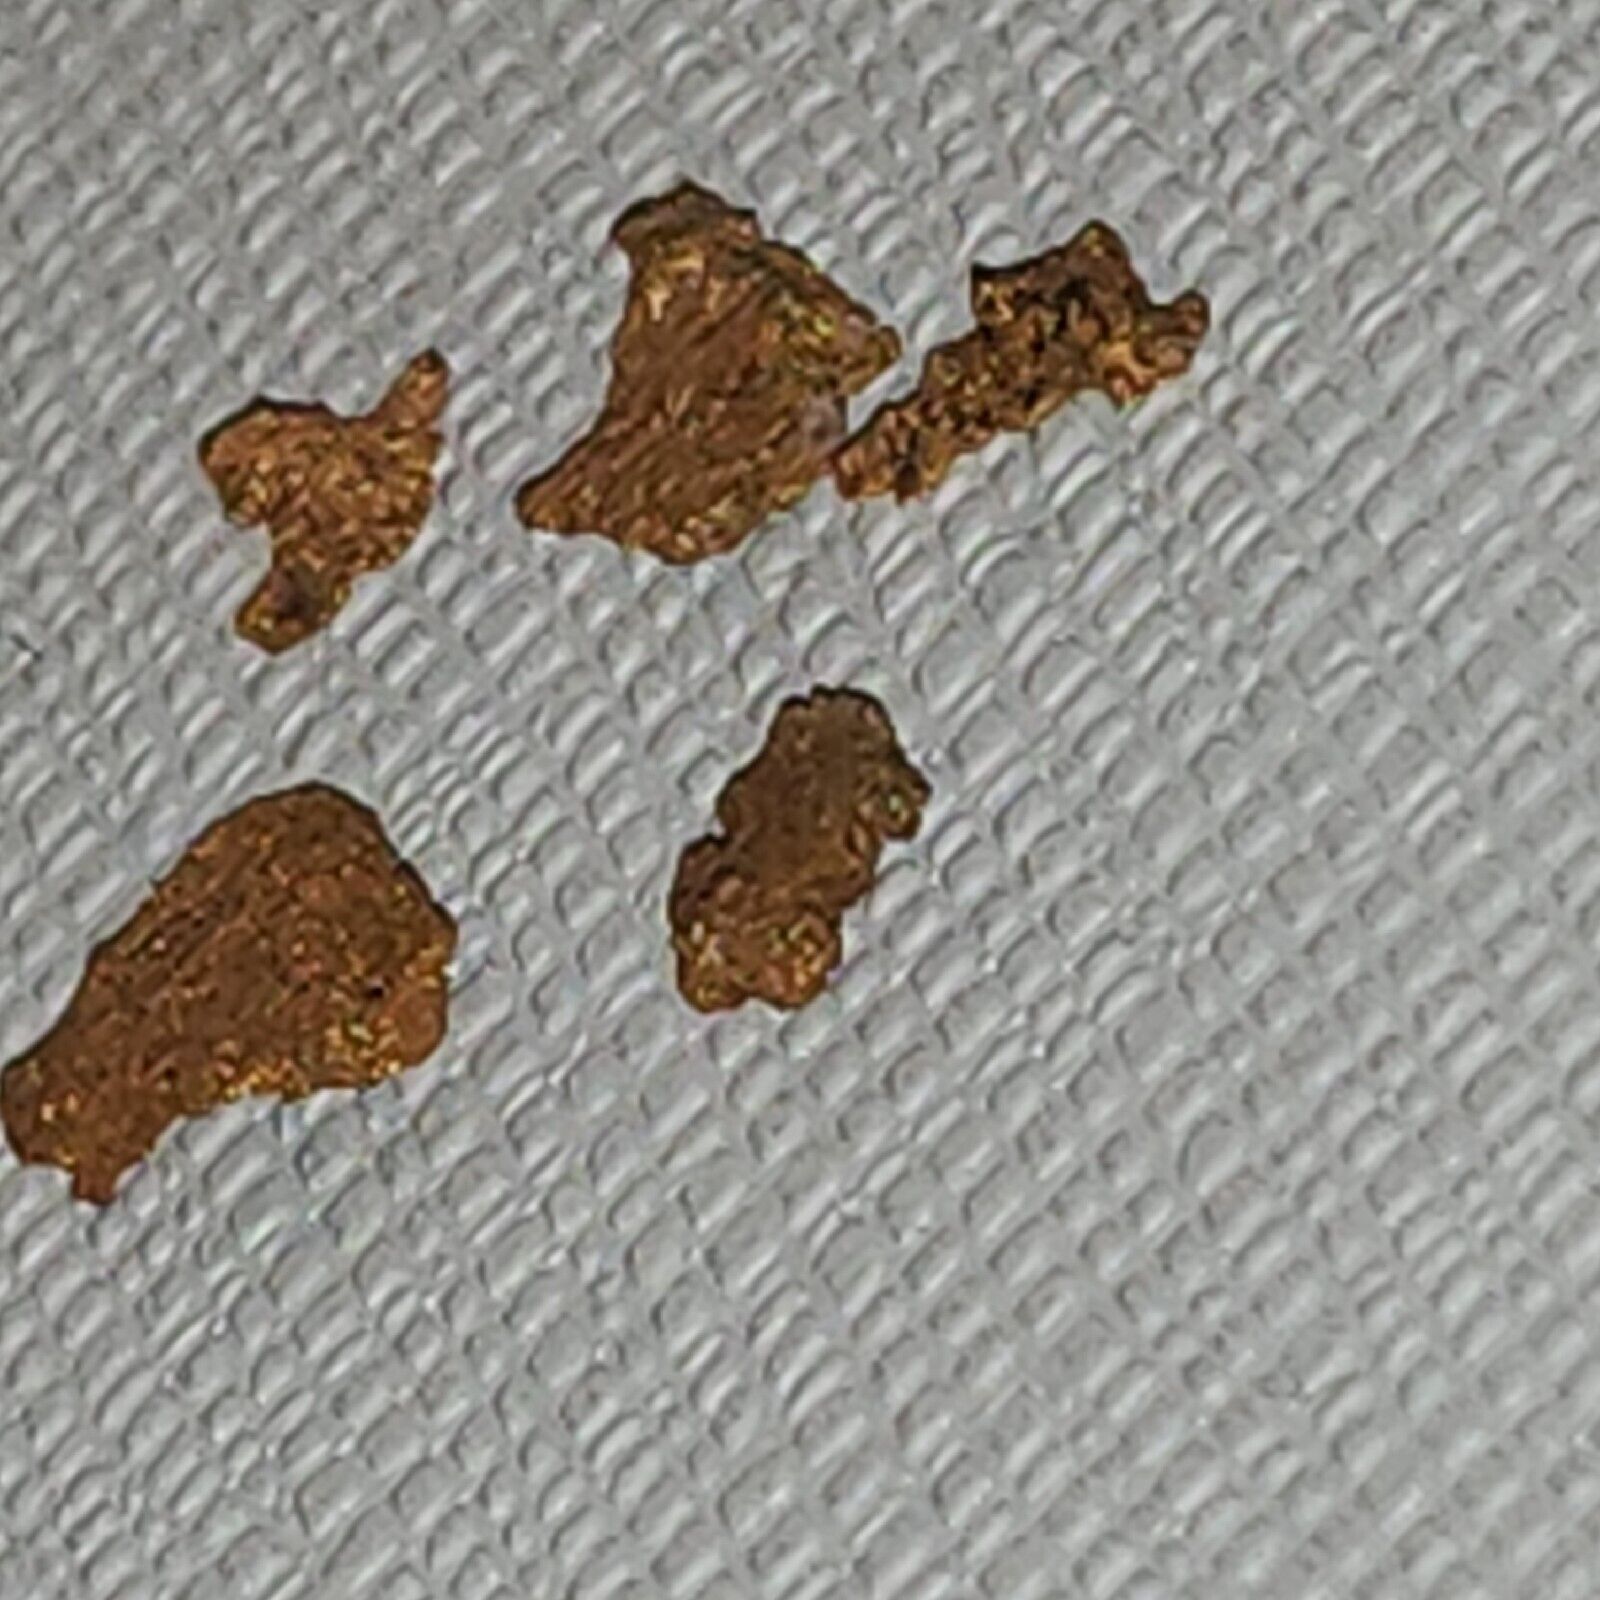 MASSIF FRANCE Rare Native Natural 5pcs Gold nugget Specimen Collector Lot Без бренда - фотография #8